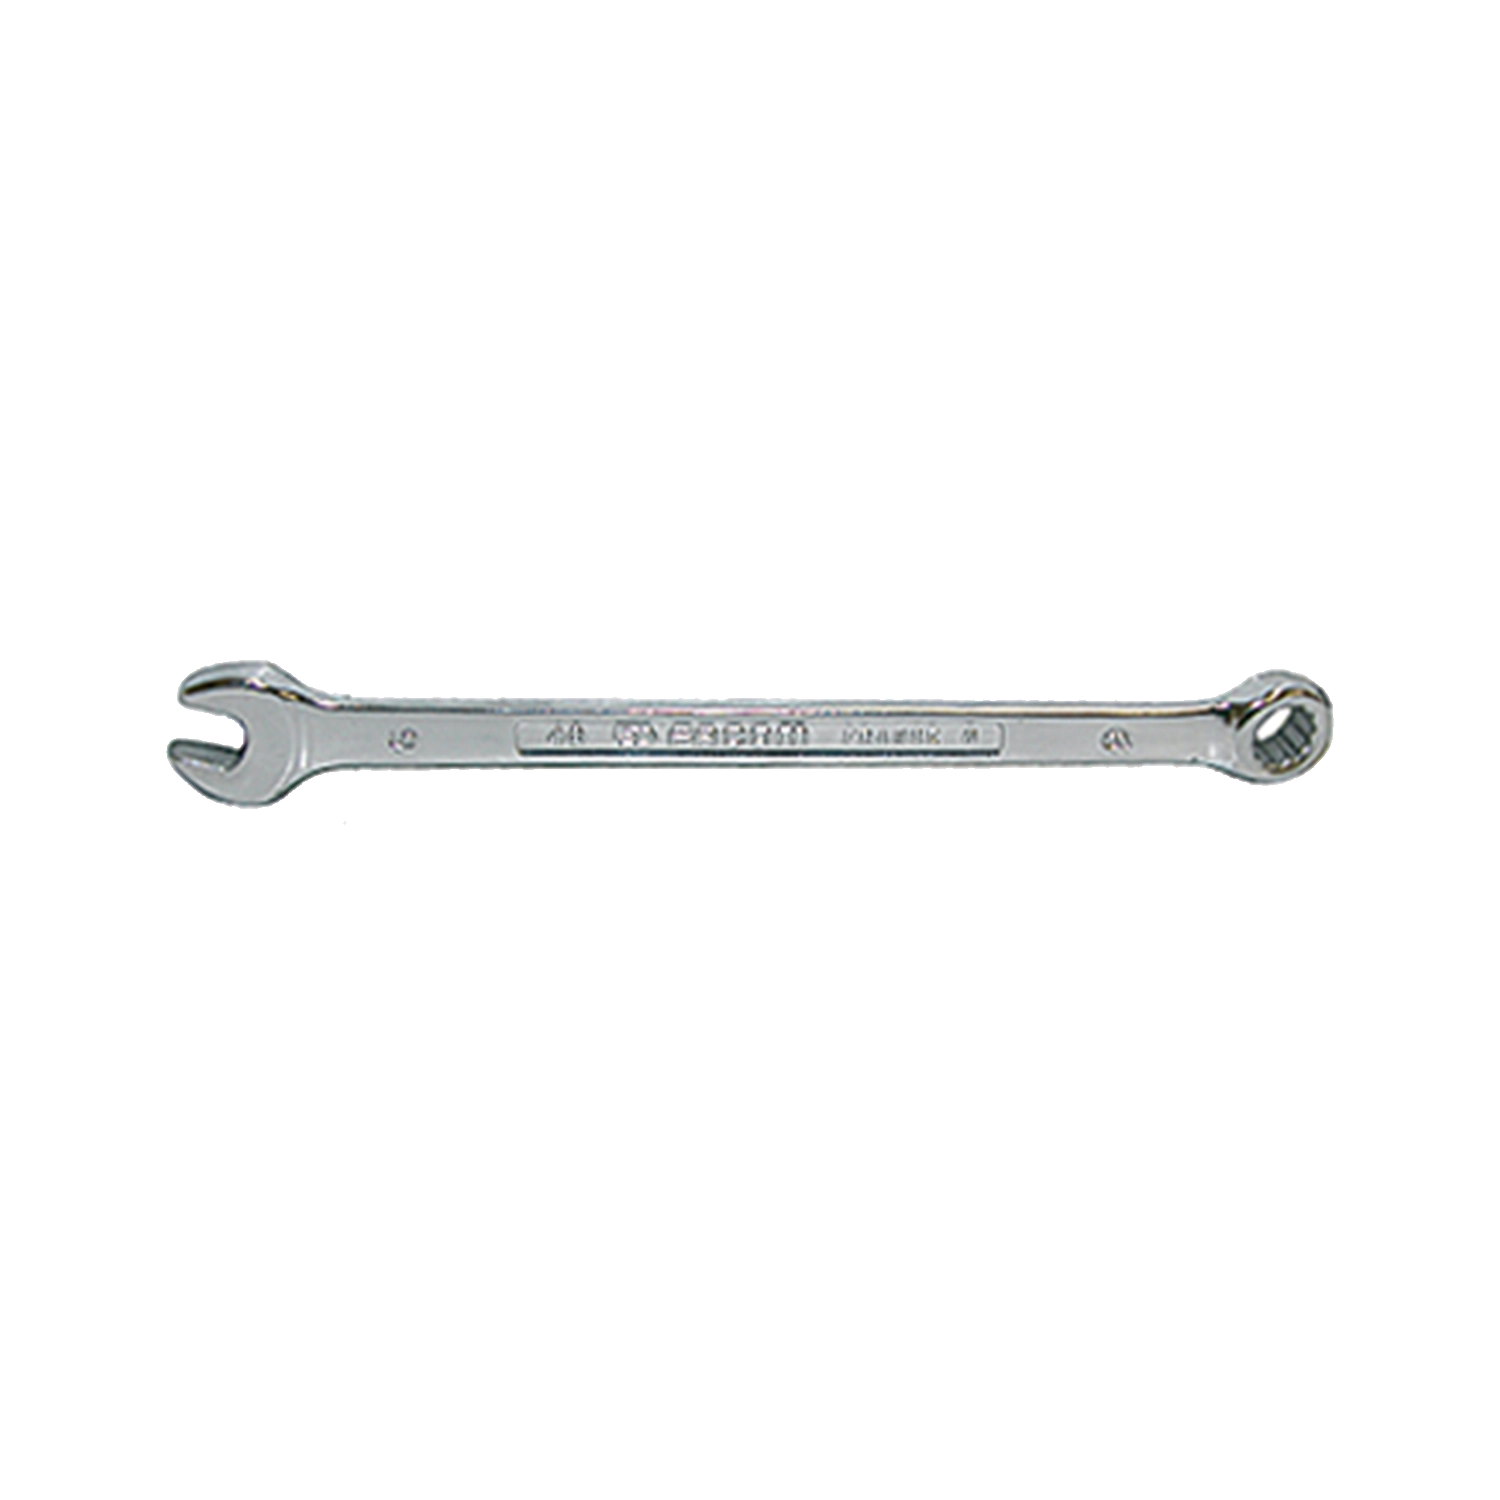 STROXX Ringsteeksleutel Type 440.19: Ringsteeksleutel met typeaanduiding 440.19.